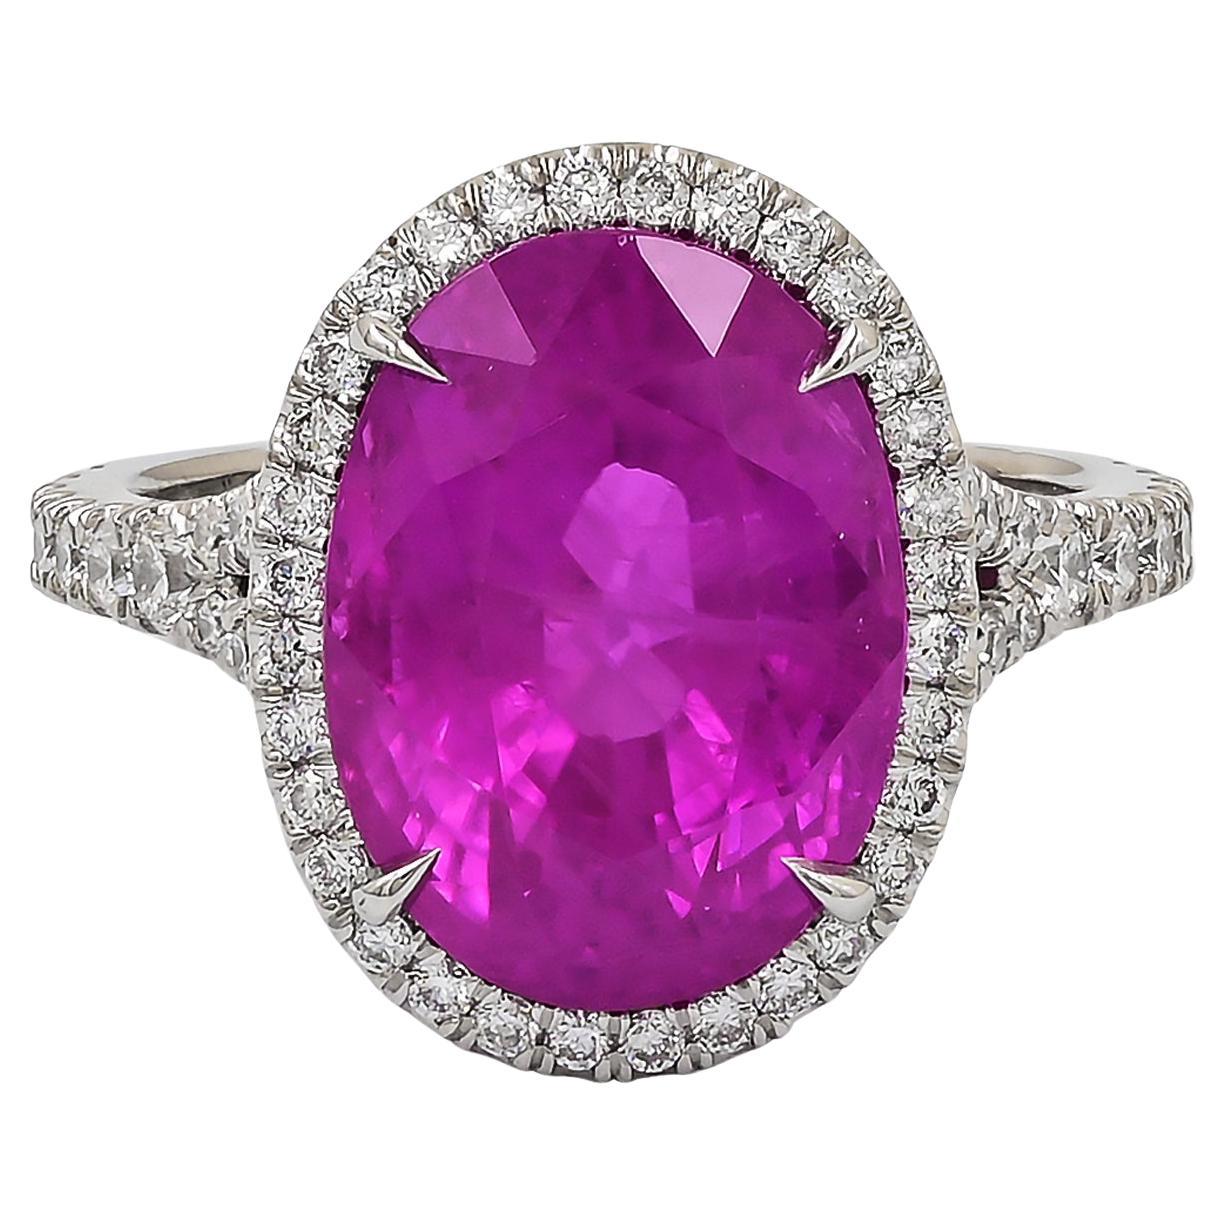 Spectra Fine Jewelry GRS Certified 10.06 Carat Burma Pink Sapphire Diamond Ring For Sale